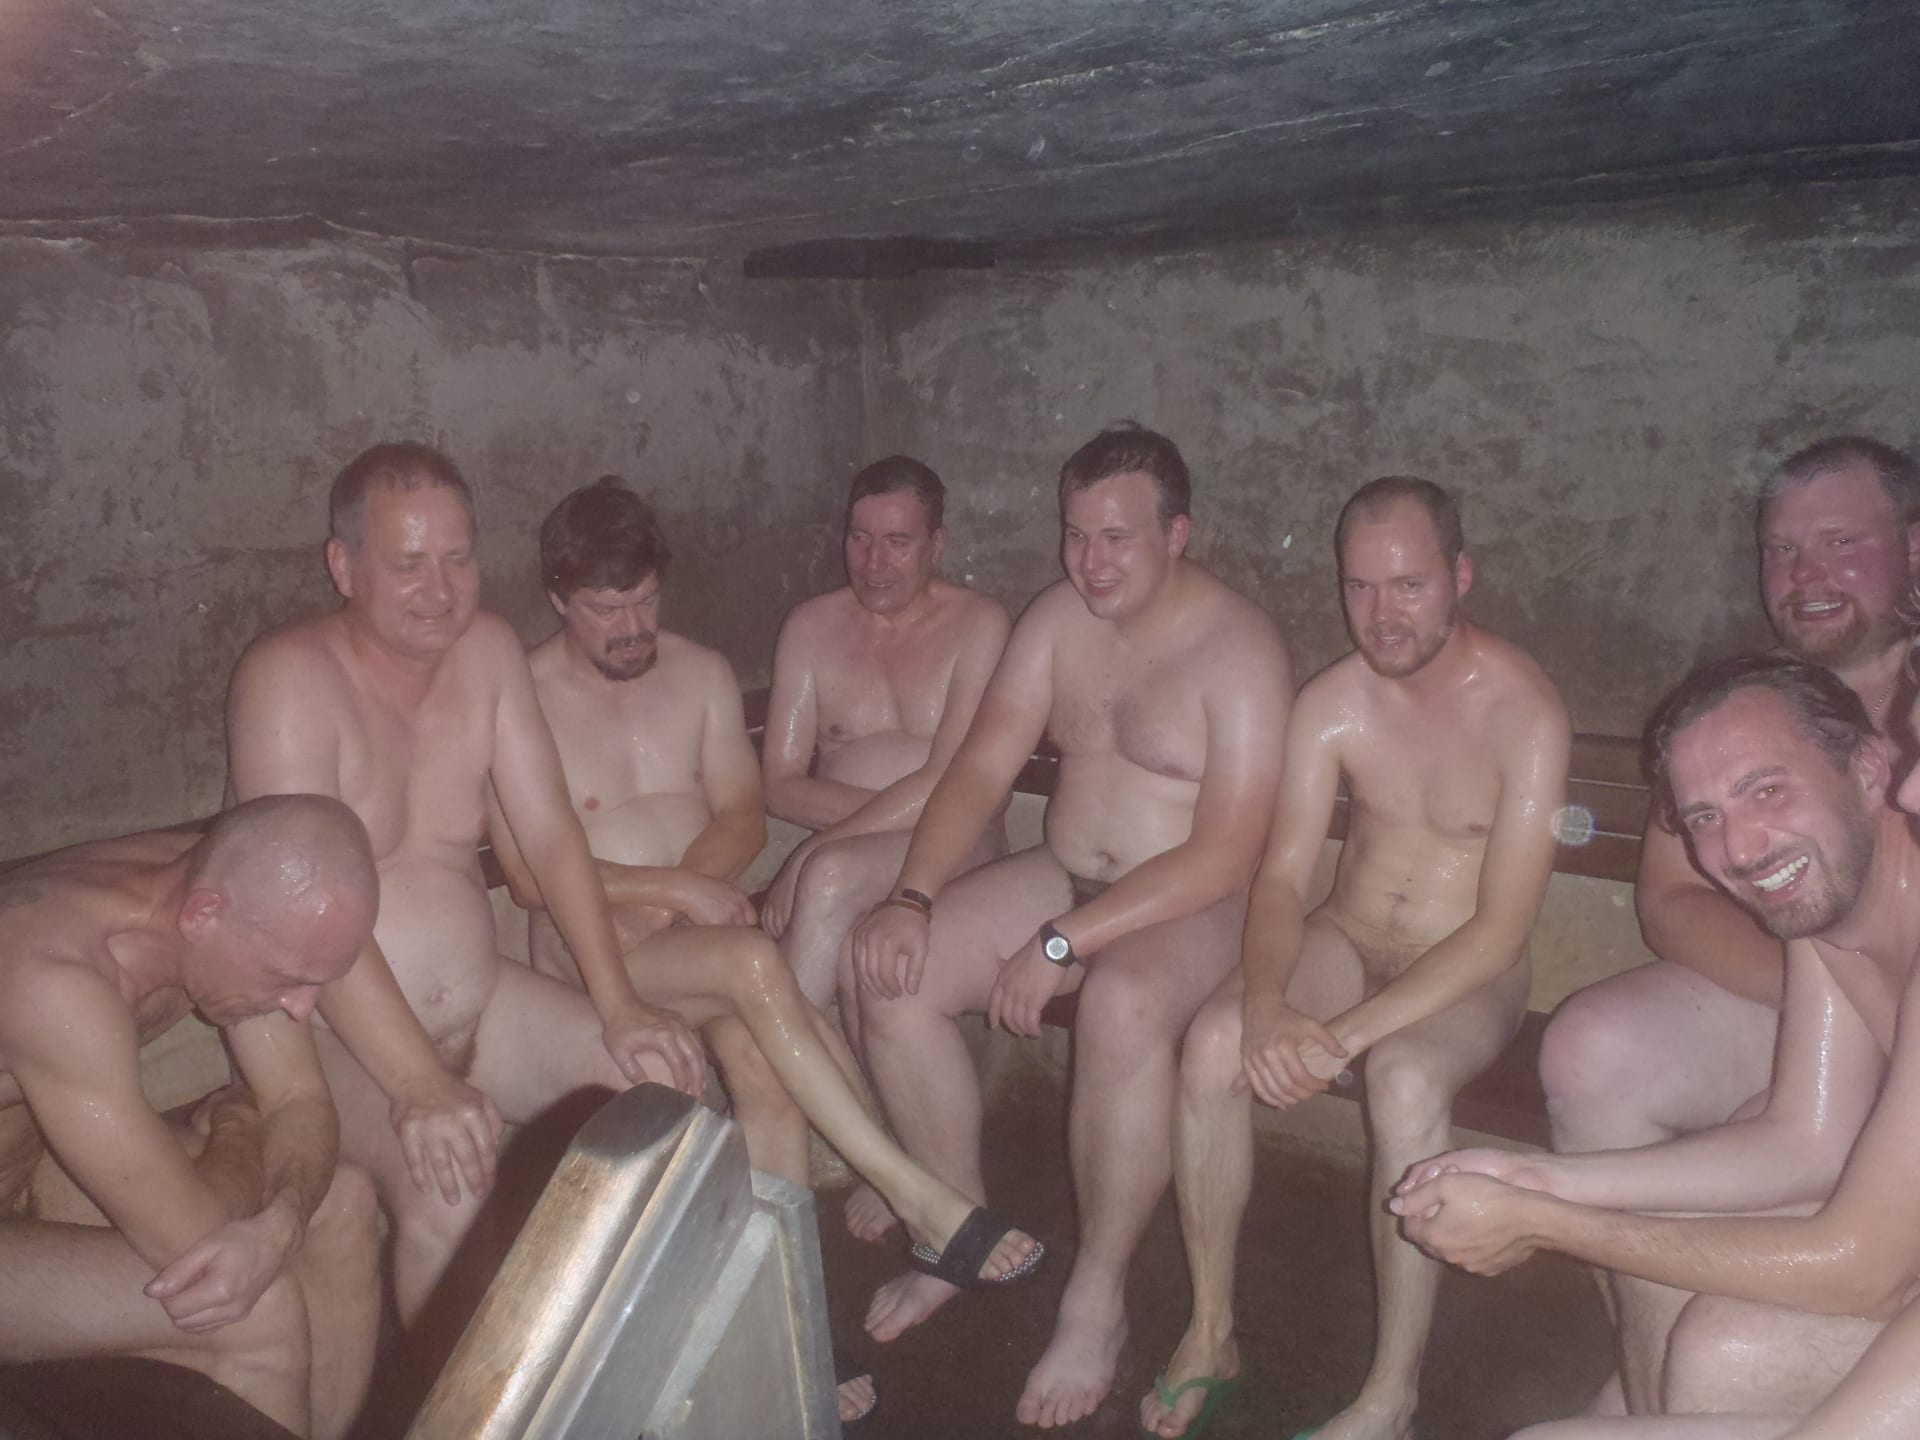 Rajaportti sauna, men's löyly space